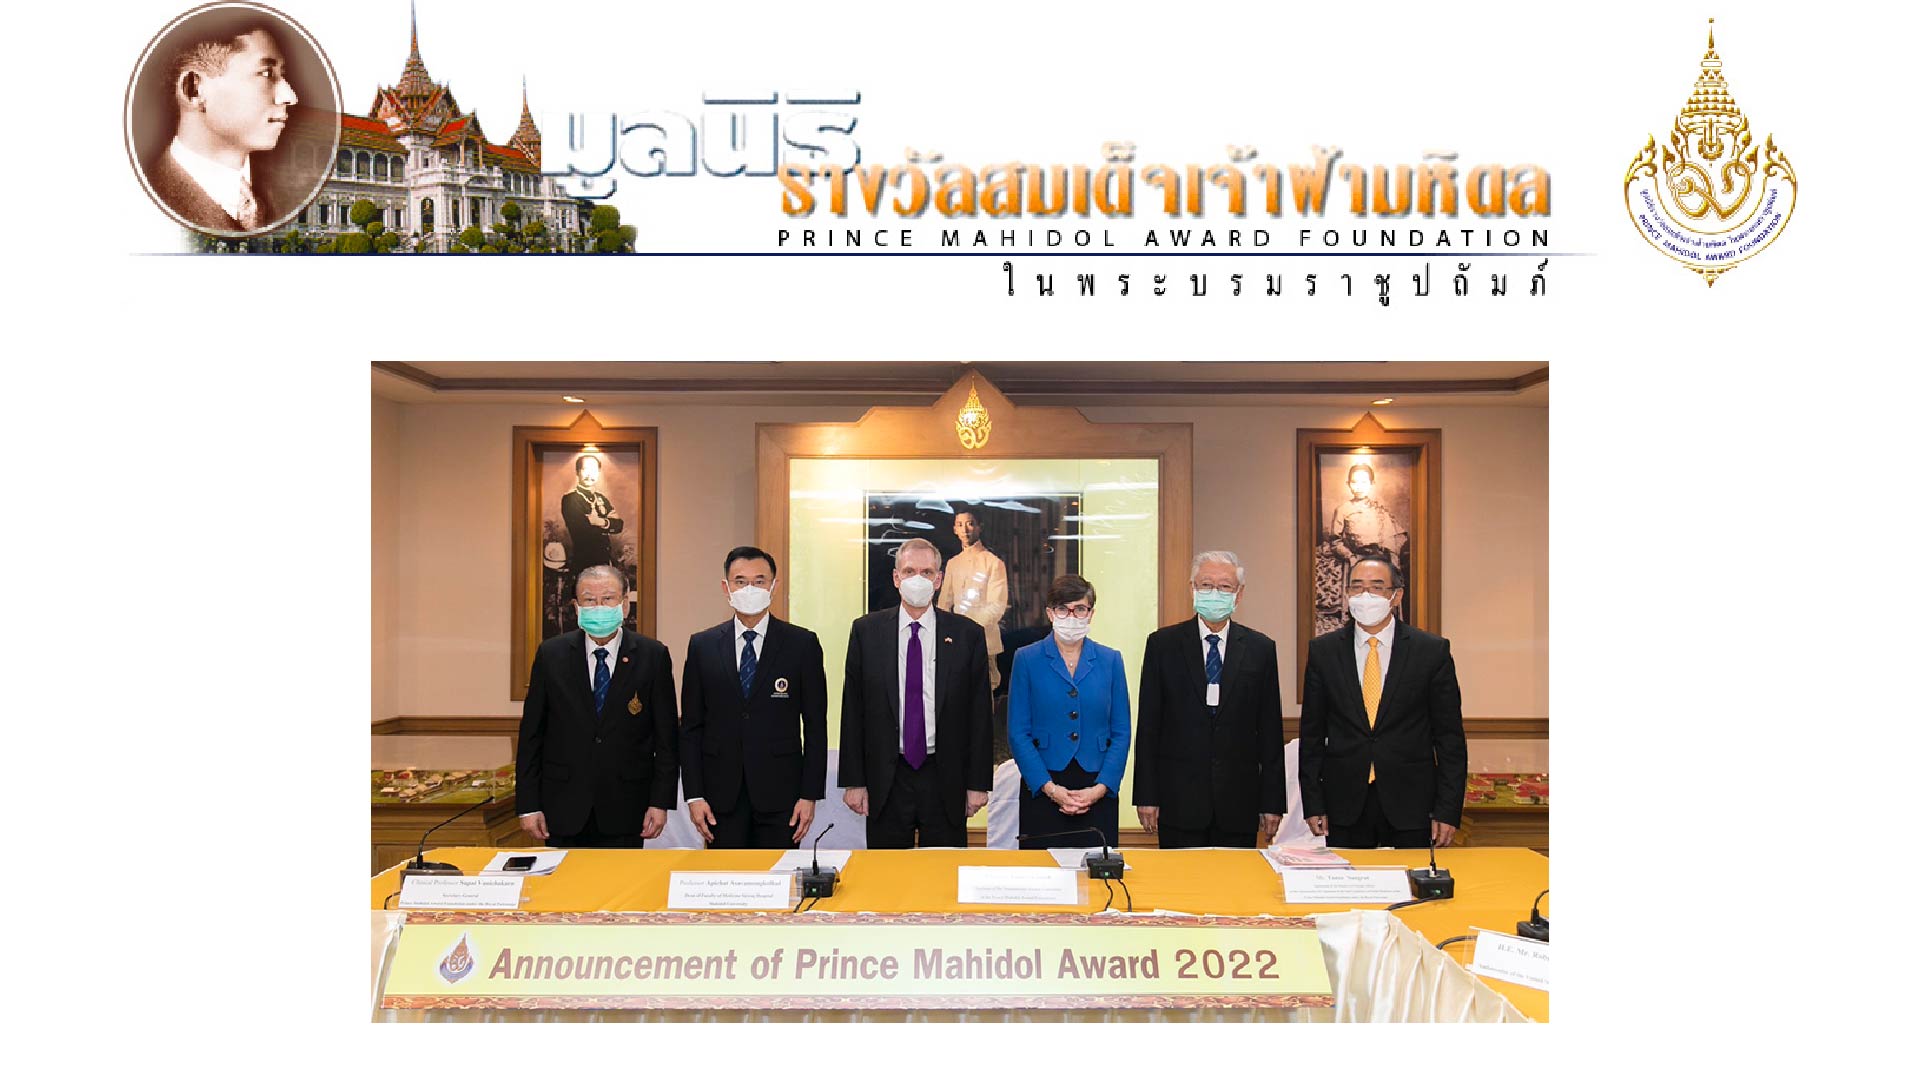 Announcement of the Prince Mahidol Award 2022